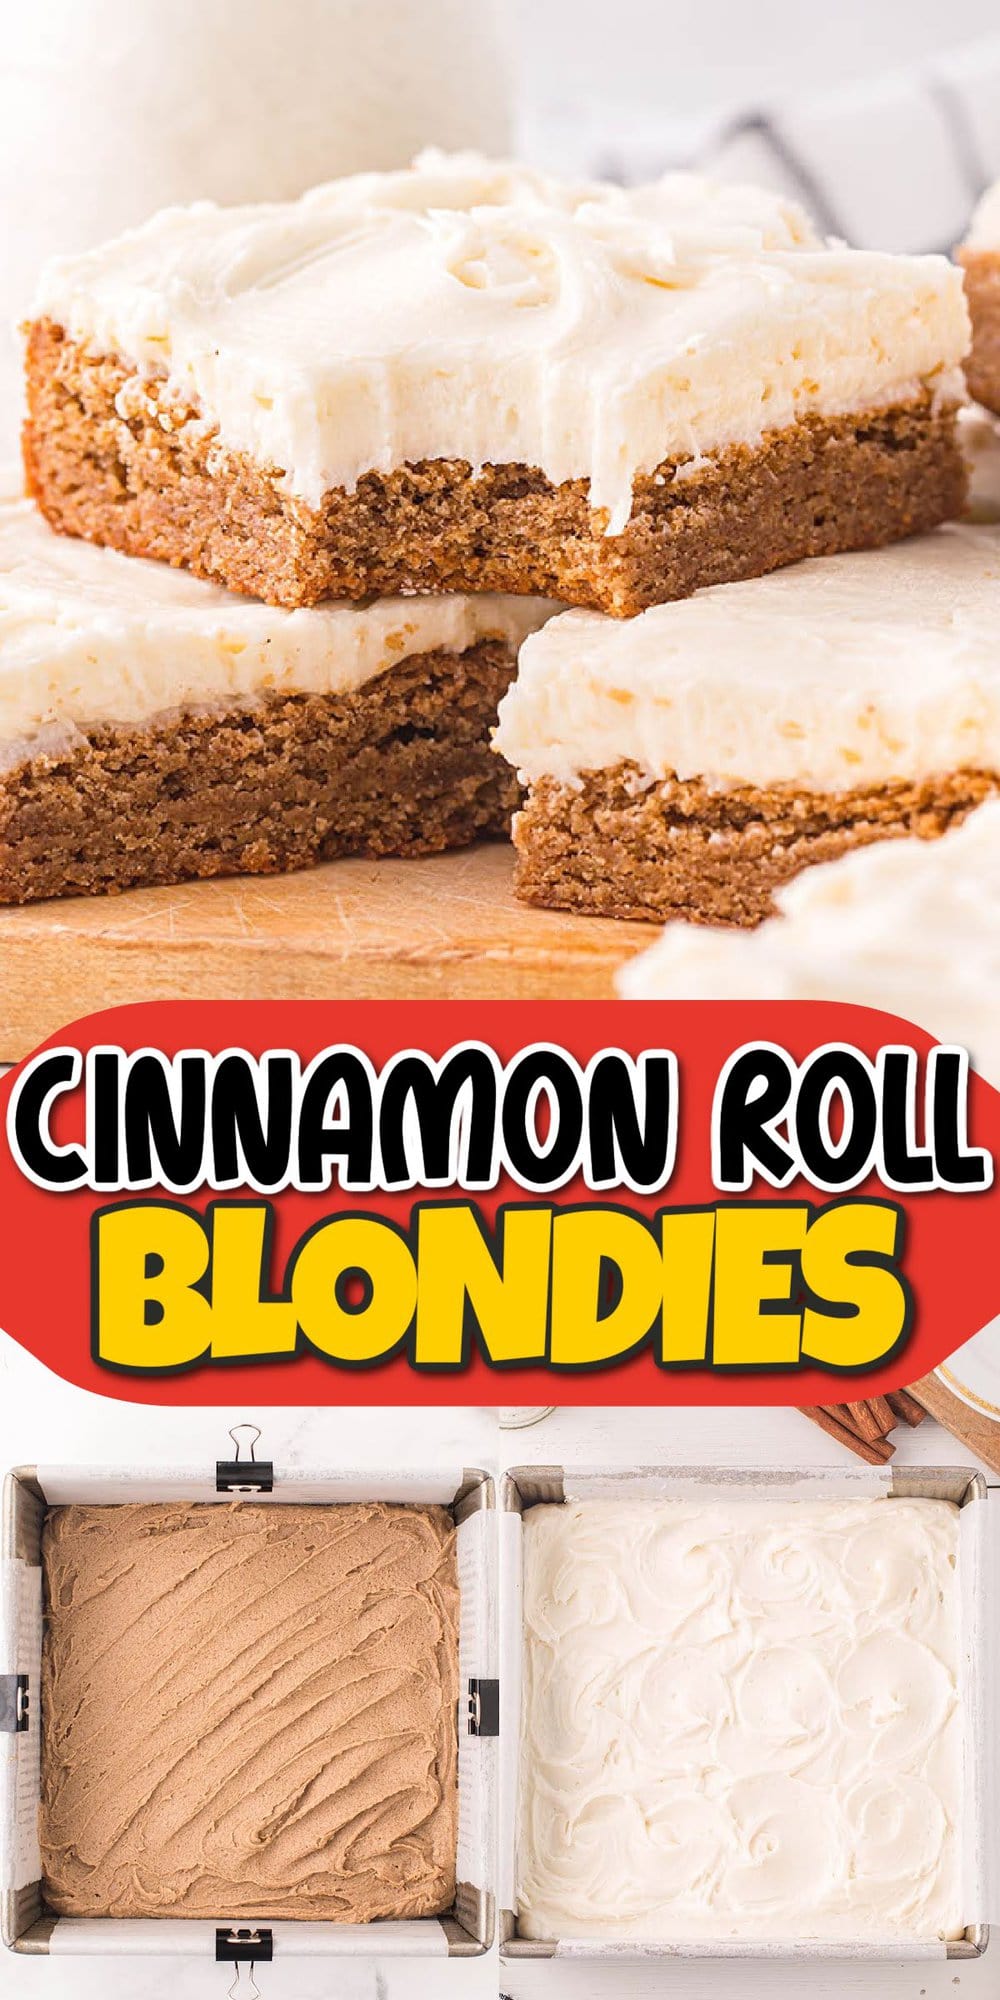 Cinnamon Roll Blondie pinterest